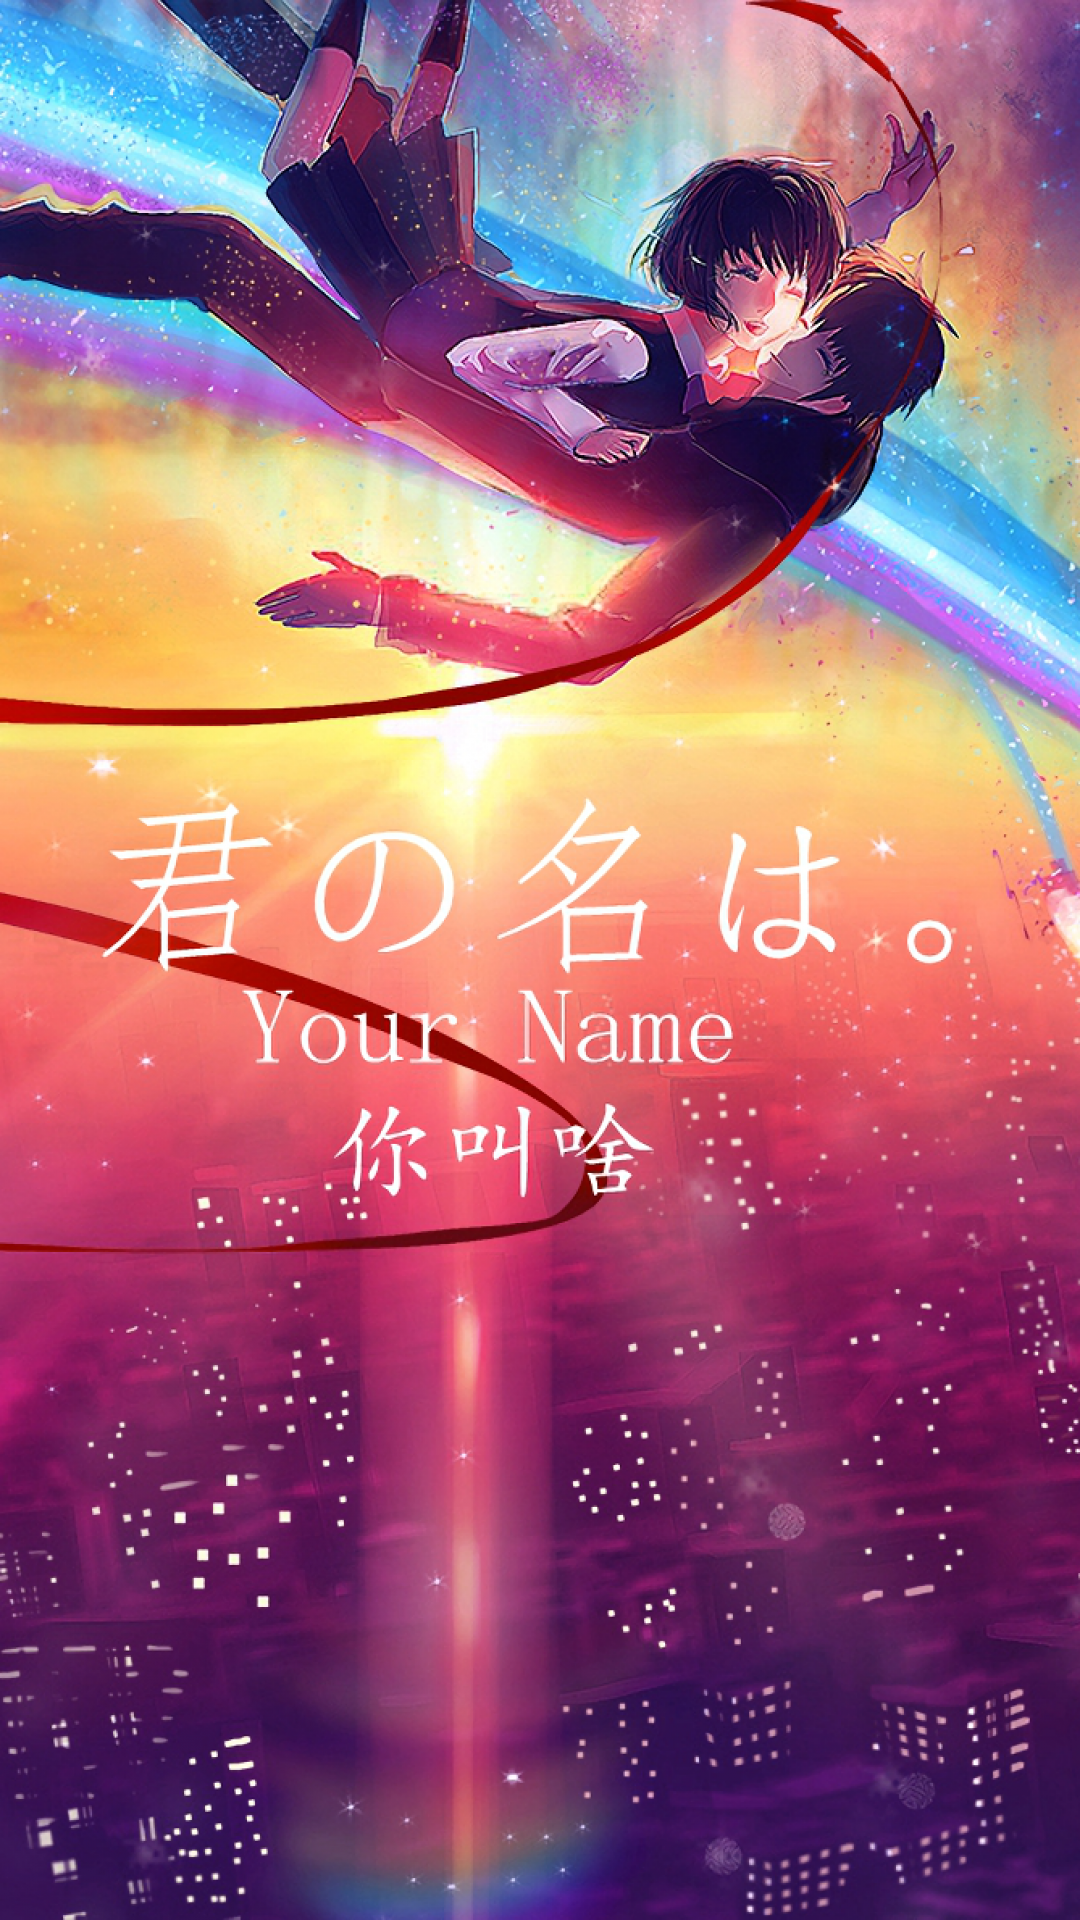 Download 1080x1920 Your Name, Taki Tachibana, Mitsuha Miyamizu, Falling, Smiling Wallpaper for iPhone iPhone 7 Plus, iPhone 6+, Sony Xperia Z, HTC One